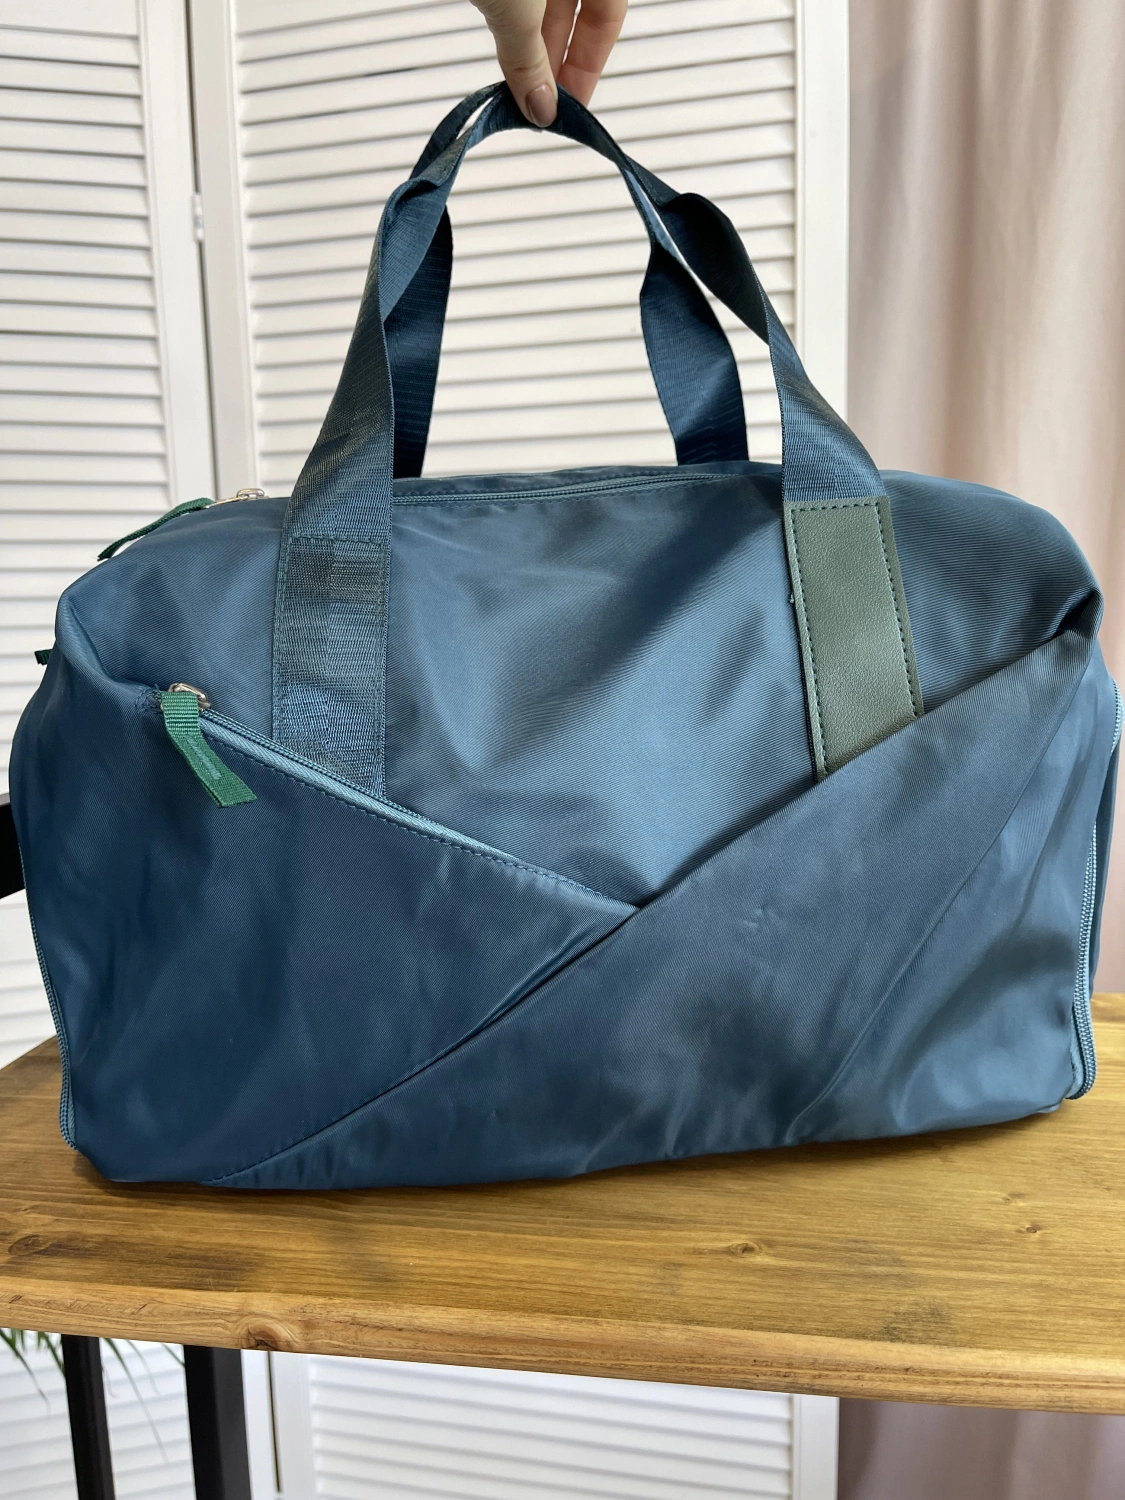 Спортивная сумка зеленый Loui Vearner 9858 фото 1